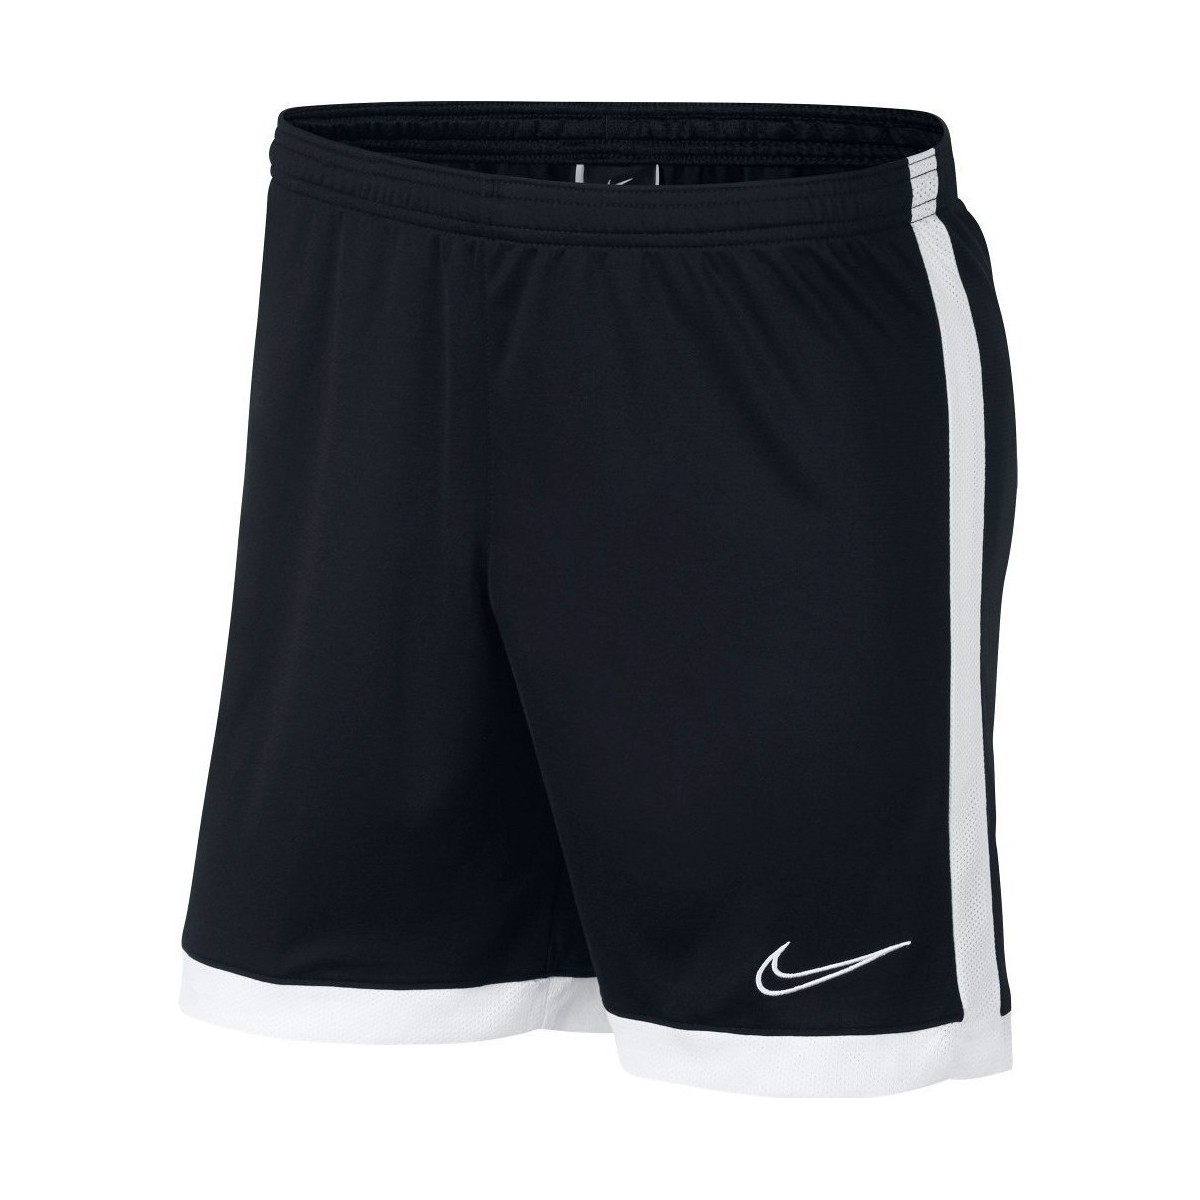 Îmbracaminte Bărbați Pantaloni trei sferturi Nike Dry Academy Negru